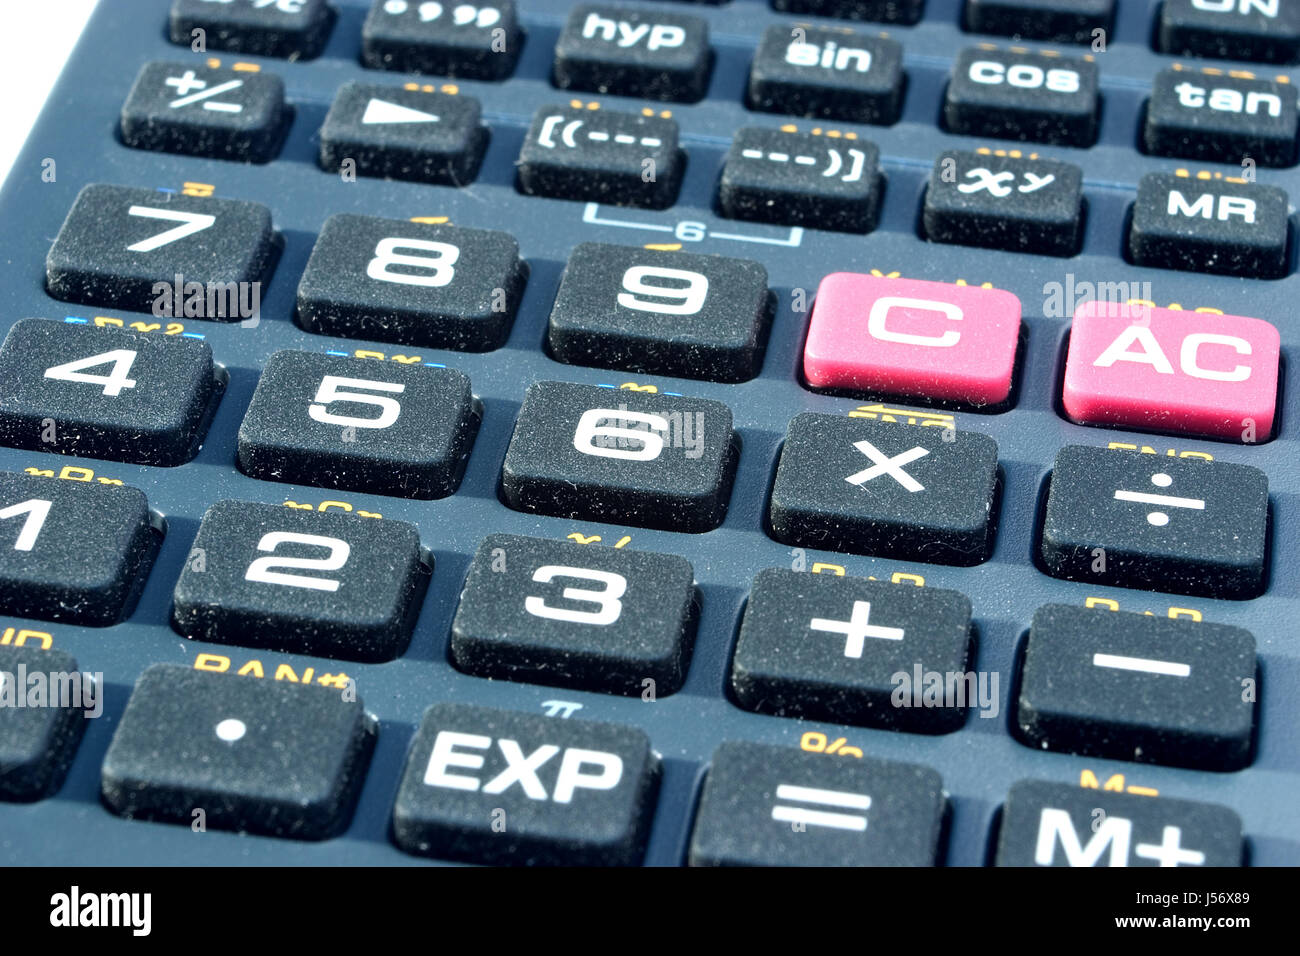 study keyboard education calculator science pocket calculator mathematics basic Stock Photo